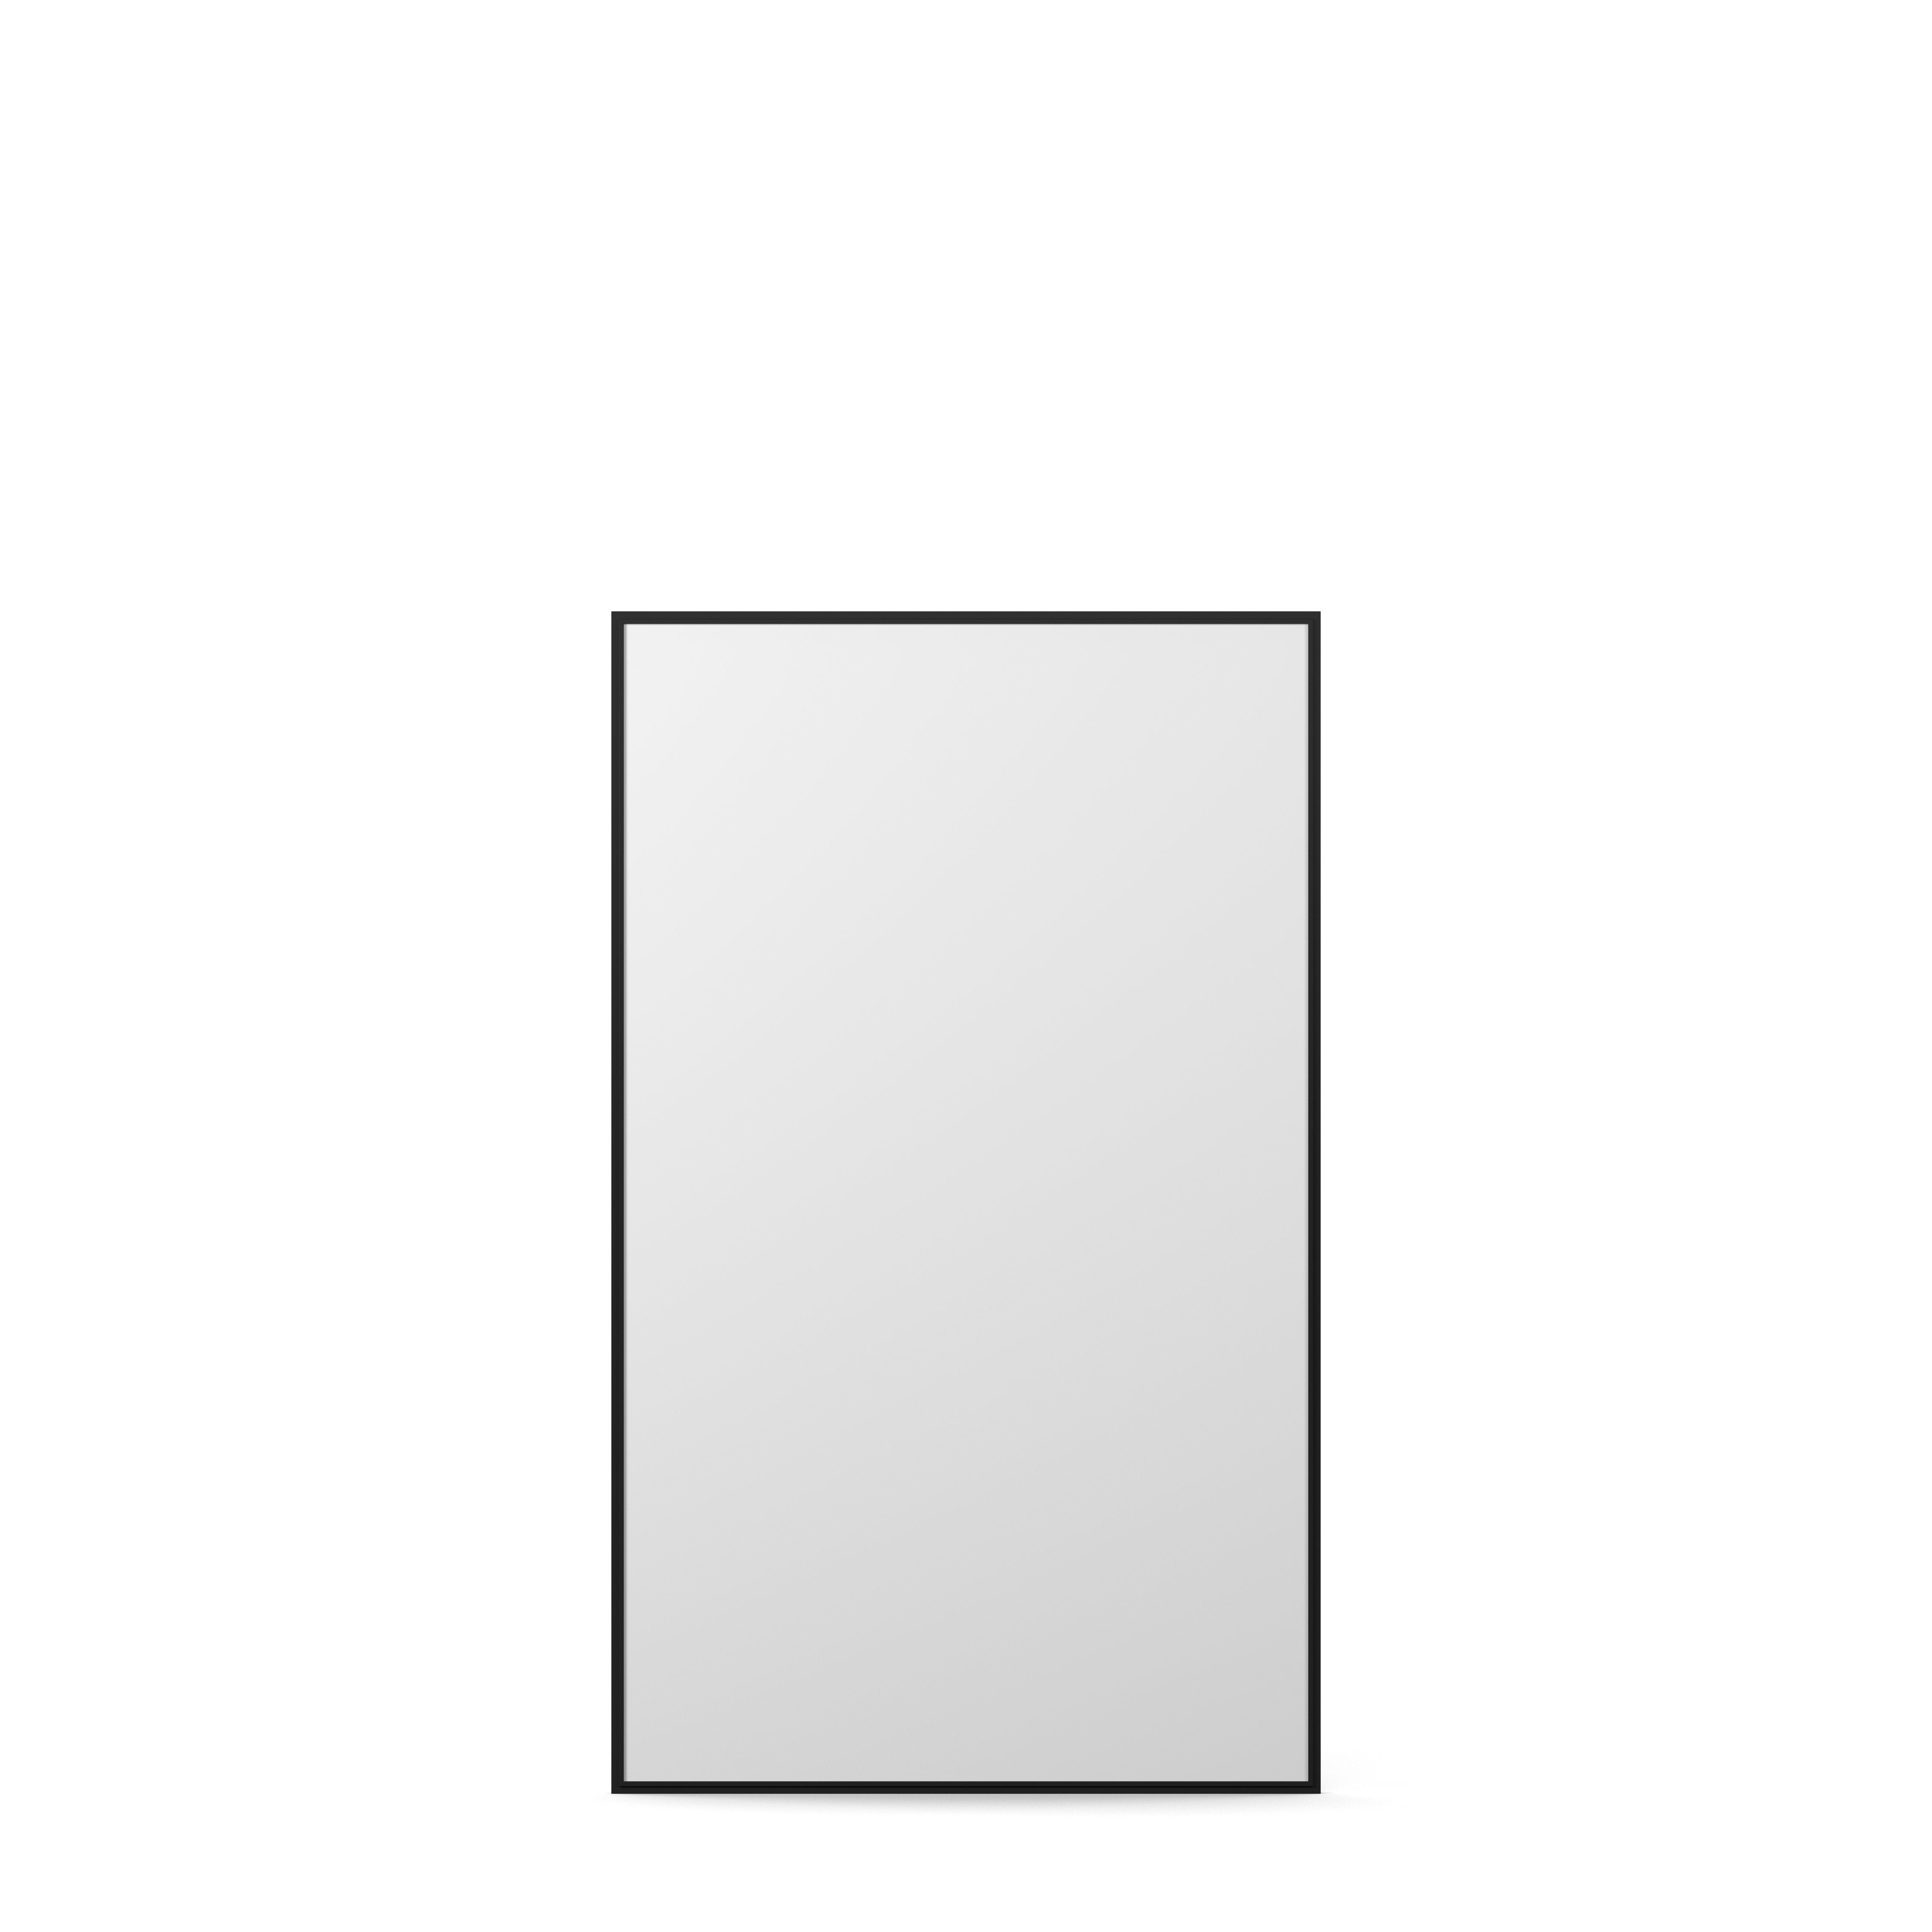 Englesson Edge Black Cube Spegel Rektangulär 831ES #färg_Edge Black #Colour_Edge Black